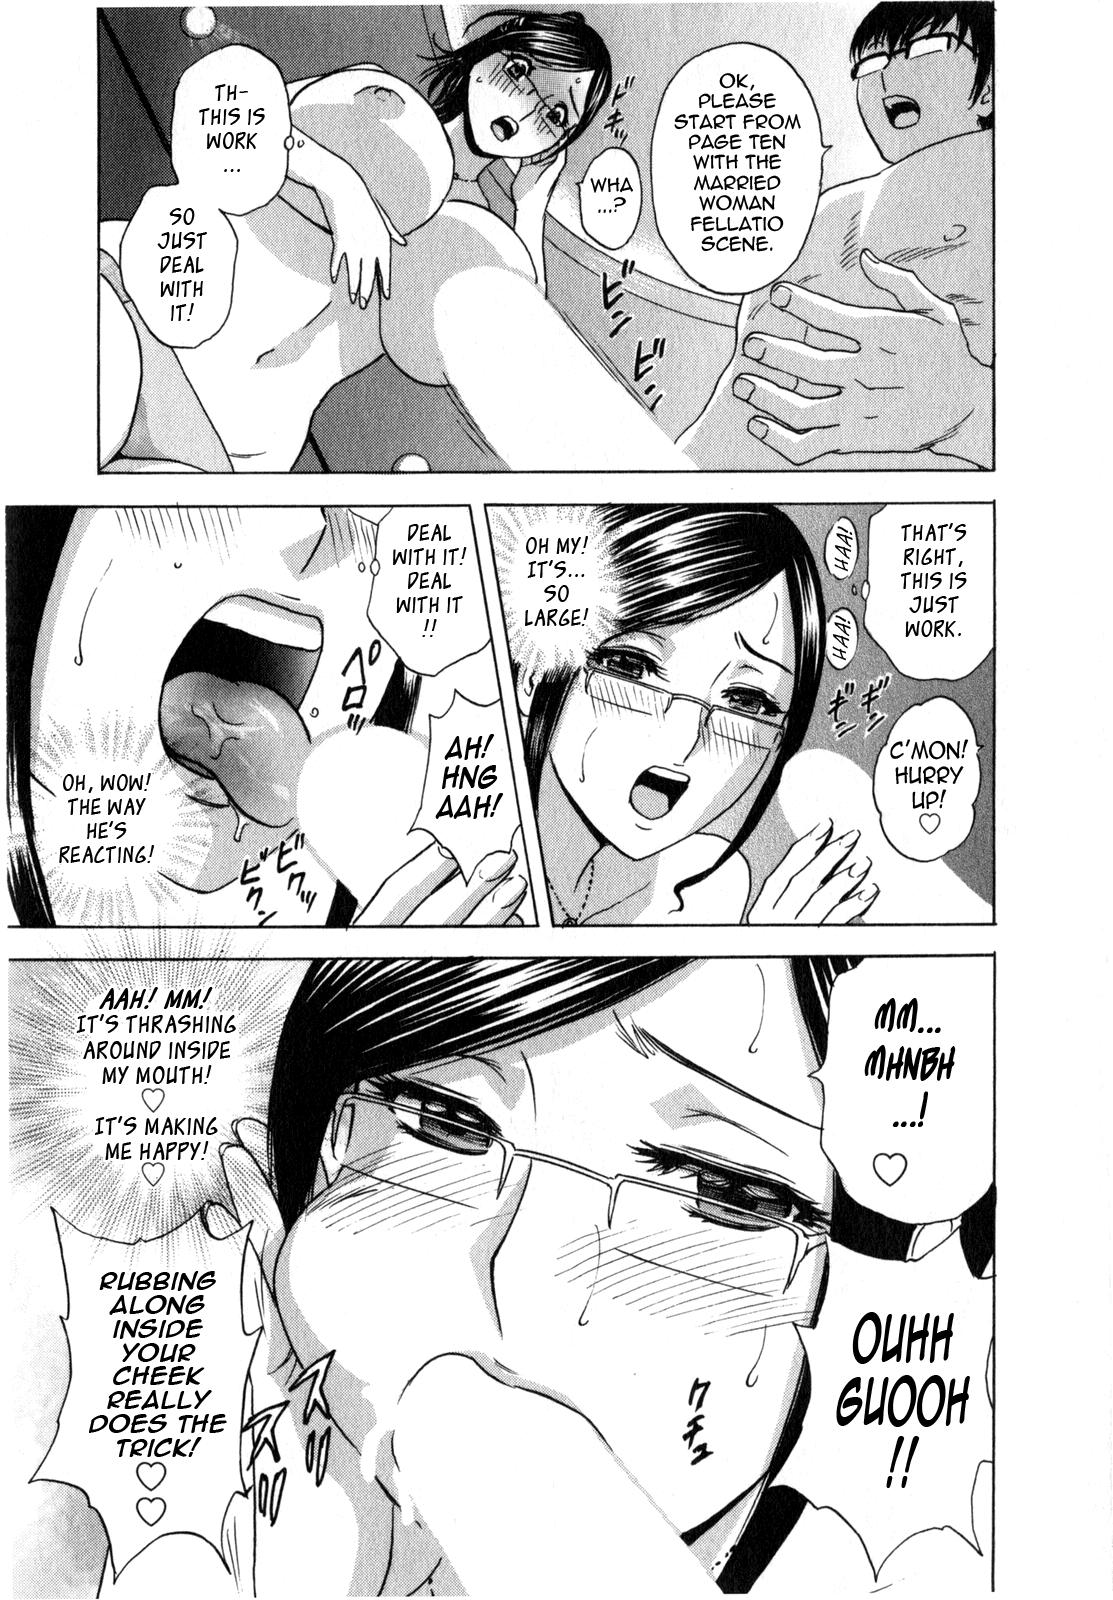 [Hidemaru] Life with Married Women Just Like a Manga 2 - Ch. 1-2 [English] {Tadanohito} 18